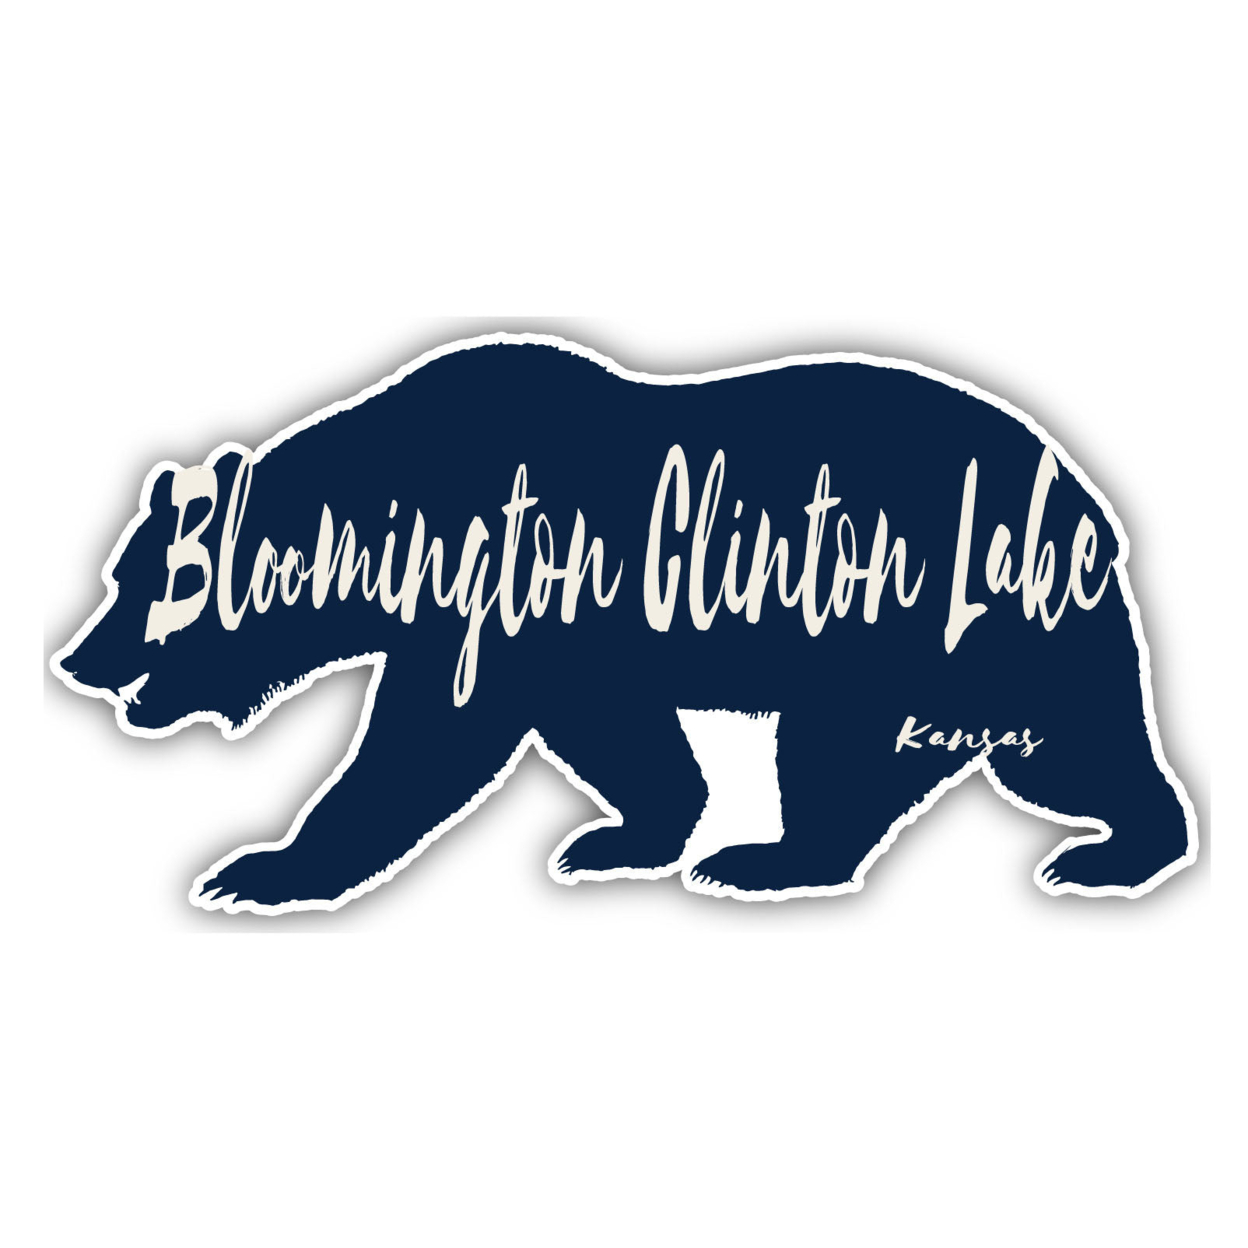 Bloomington Clinton Lake Kansas Souvenir Decorative Stickers (Choose Theme And Size) - 4-Pack, 10-Inch, Bear